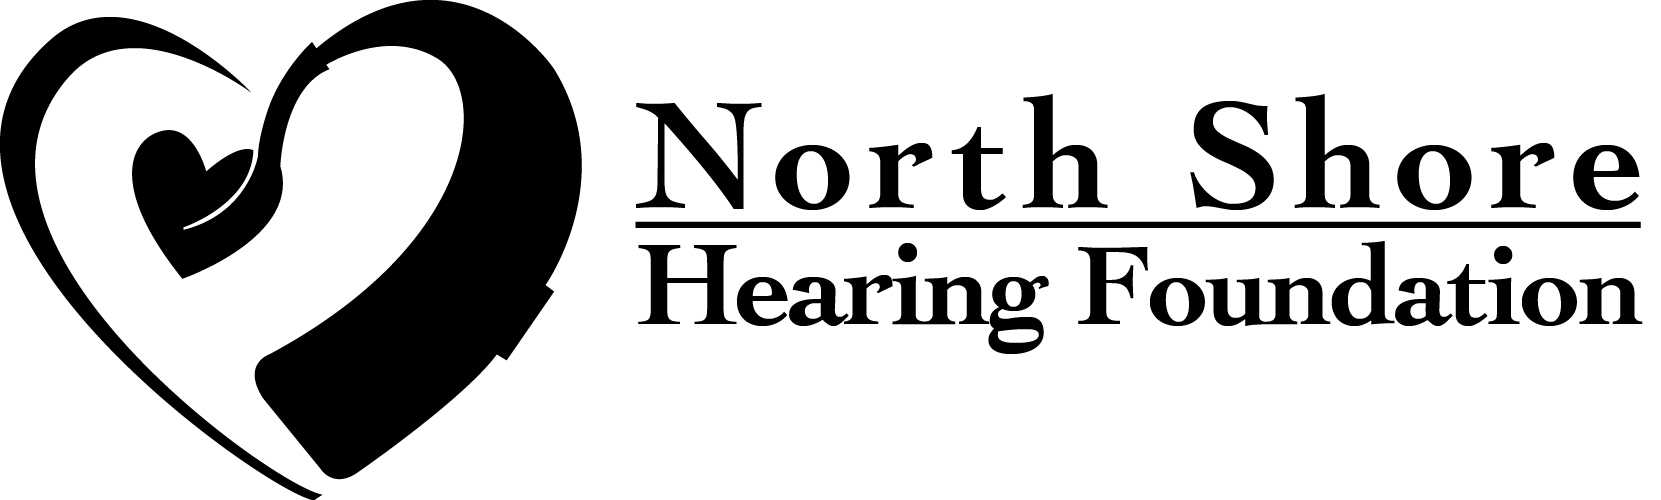 North Shore Hearing Foundation